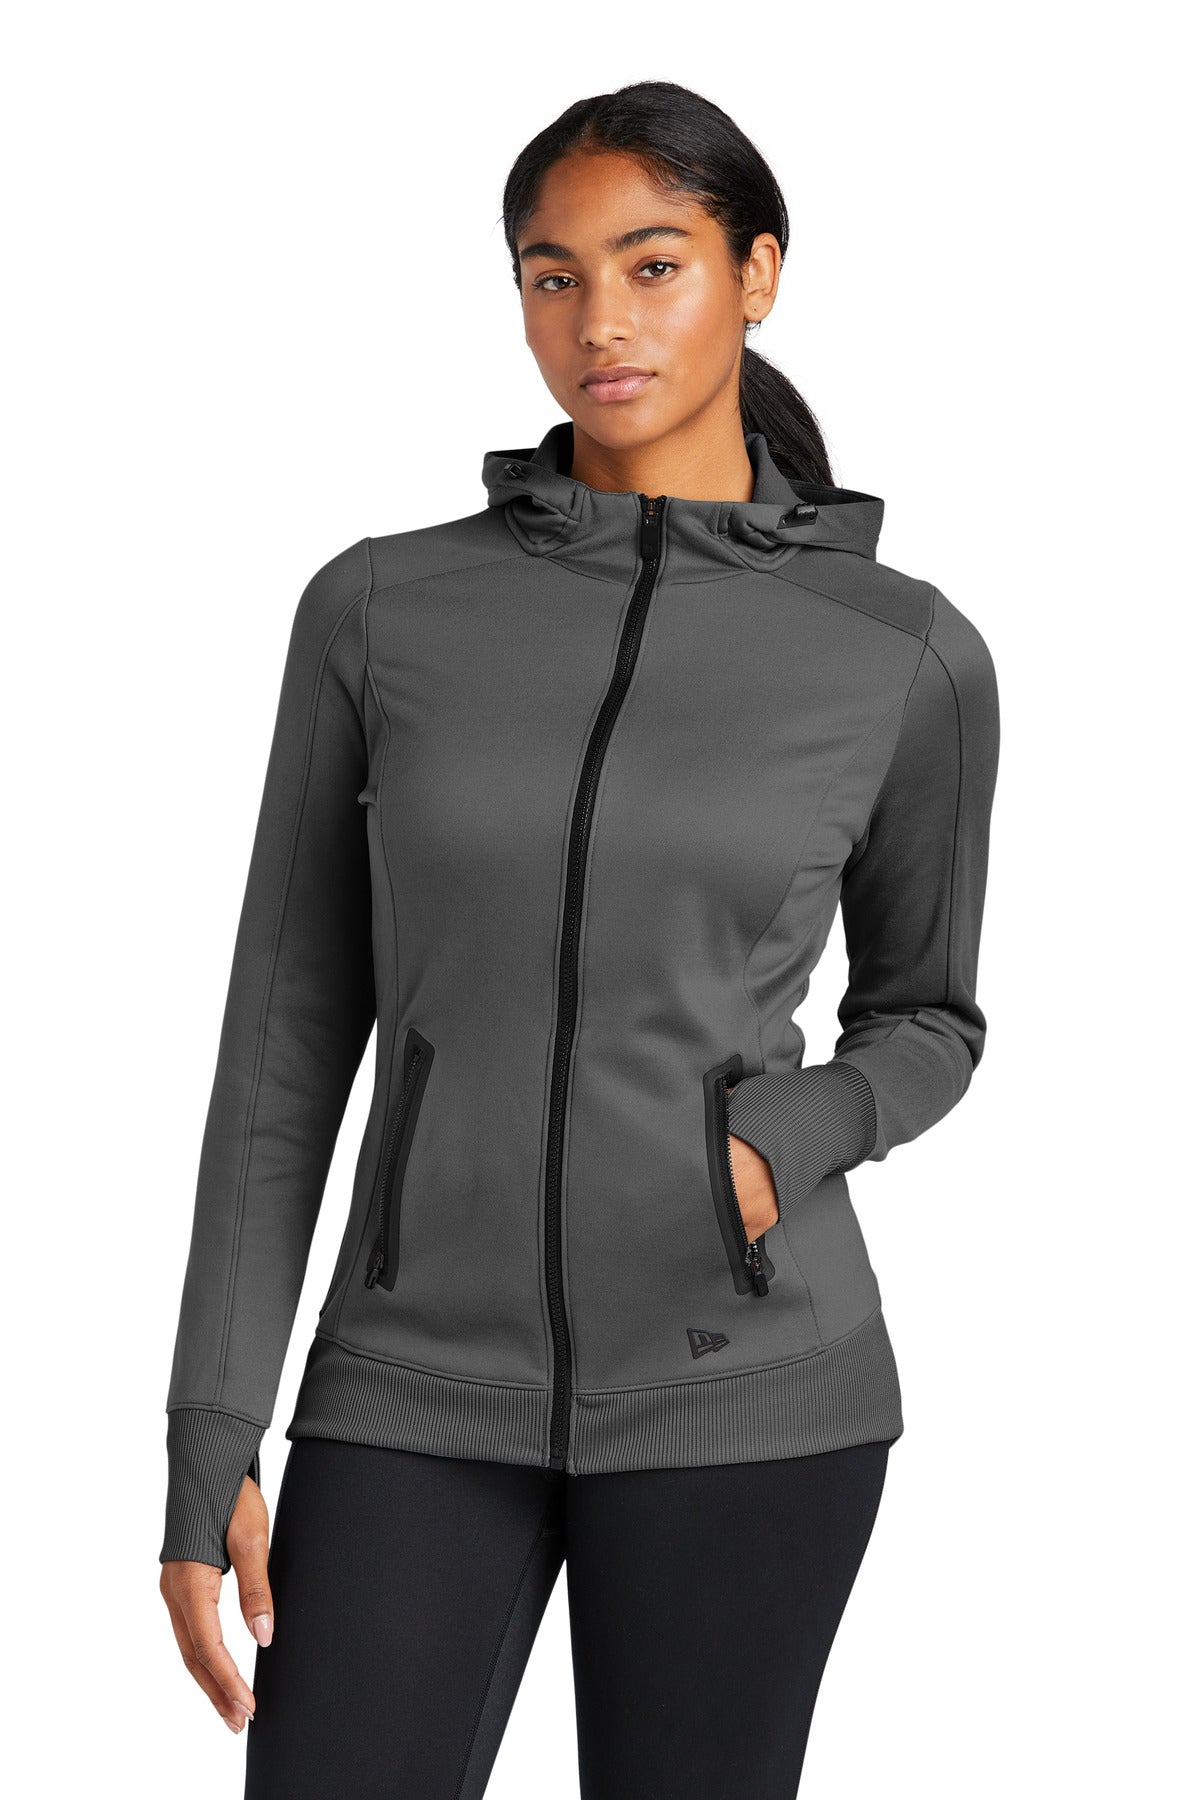 New Era ® Ladies Venue Fleece Full-Zip Hoodie. LNEA522 - DFW Impression